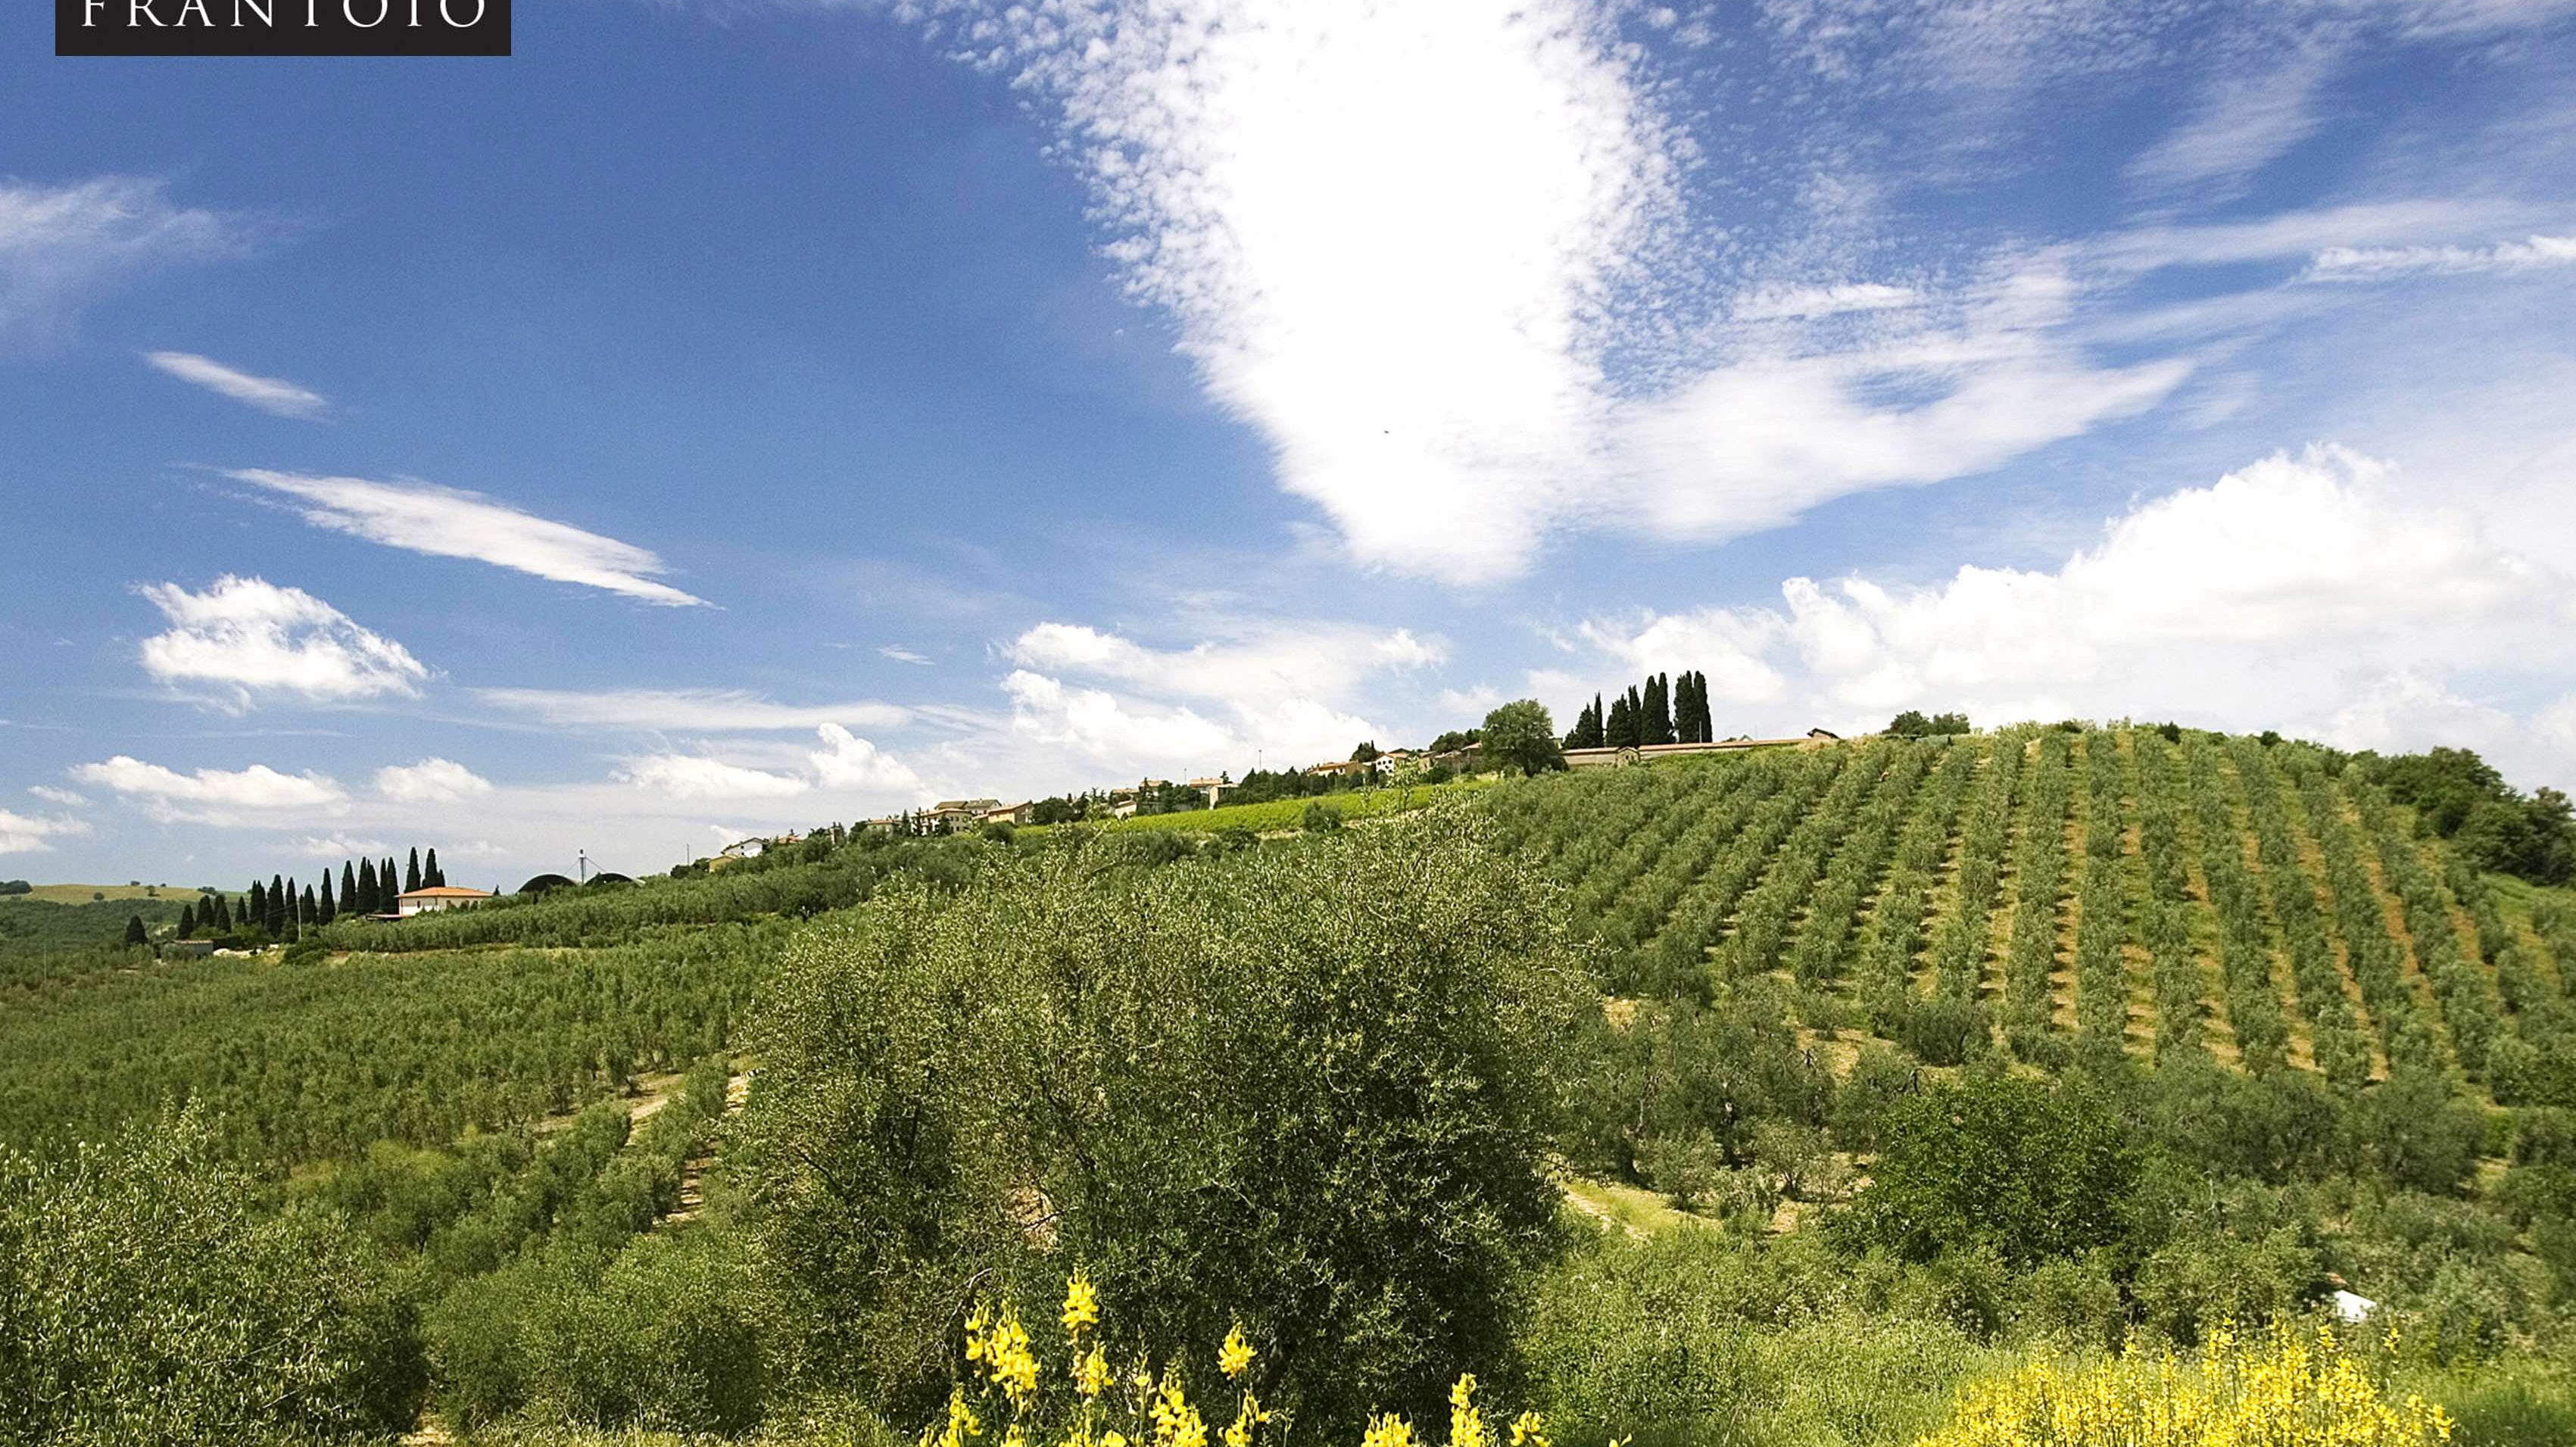 Olives harvest at Frantoio Franci in Tuscany